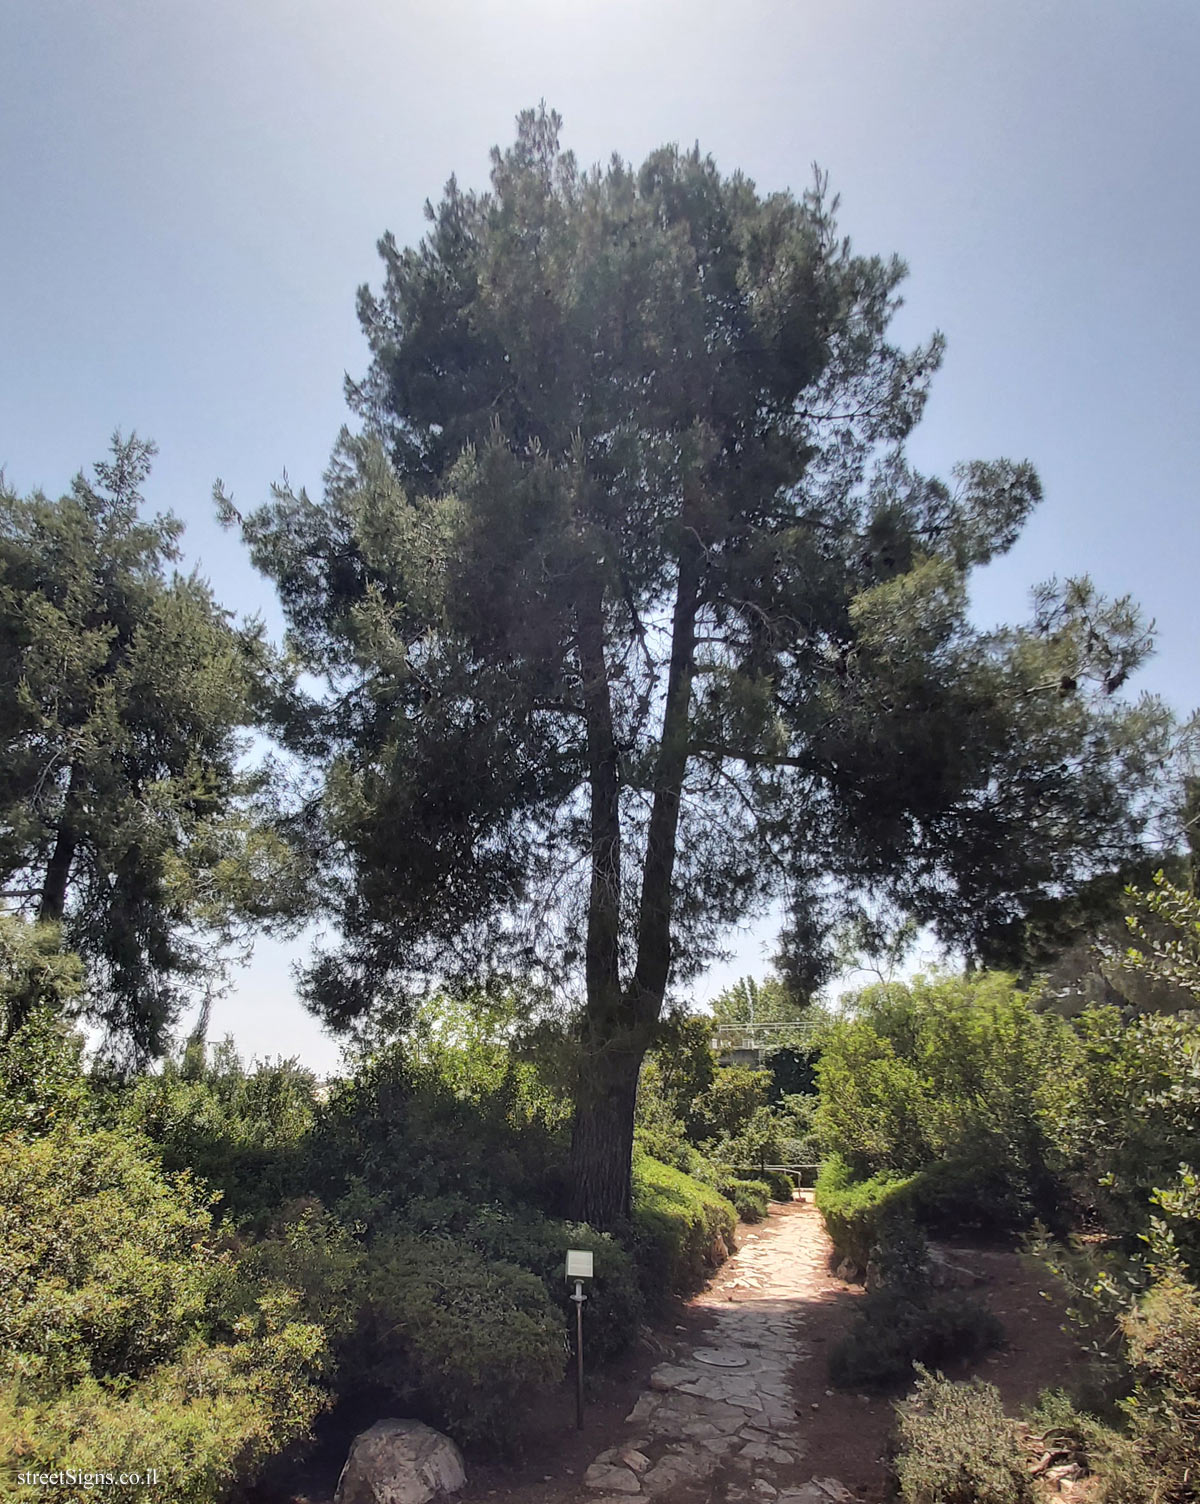 The Hebrew University of Jerusalem - Discovery Tree Walk - Aleppo Pine - Safra Campus